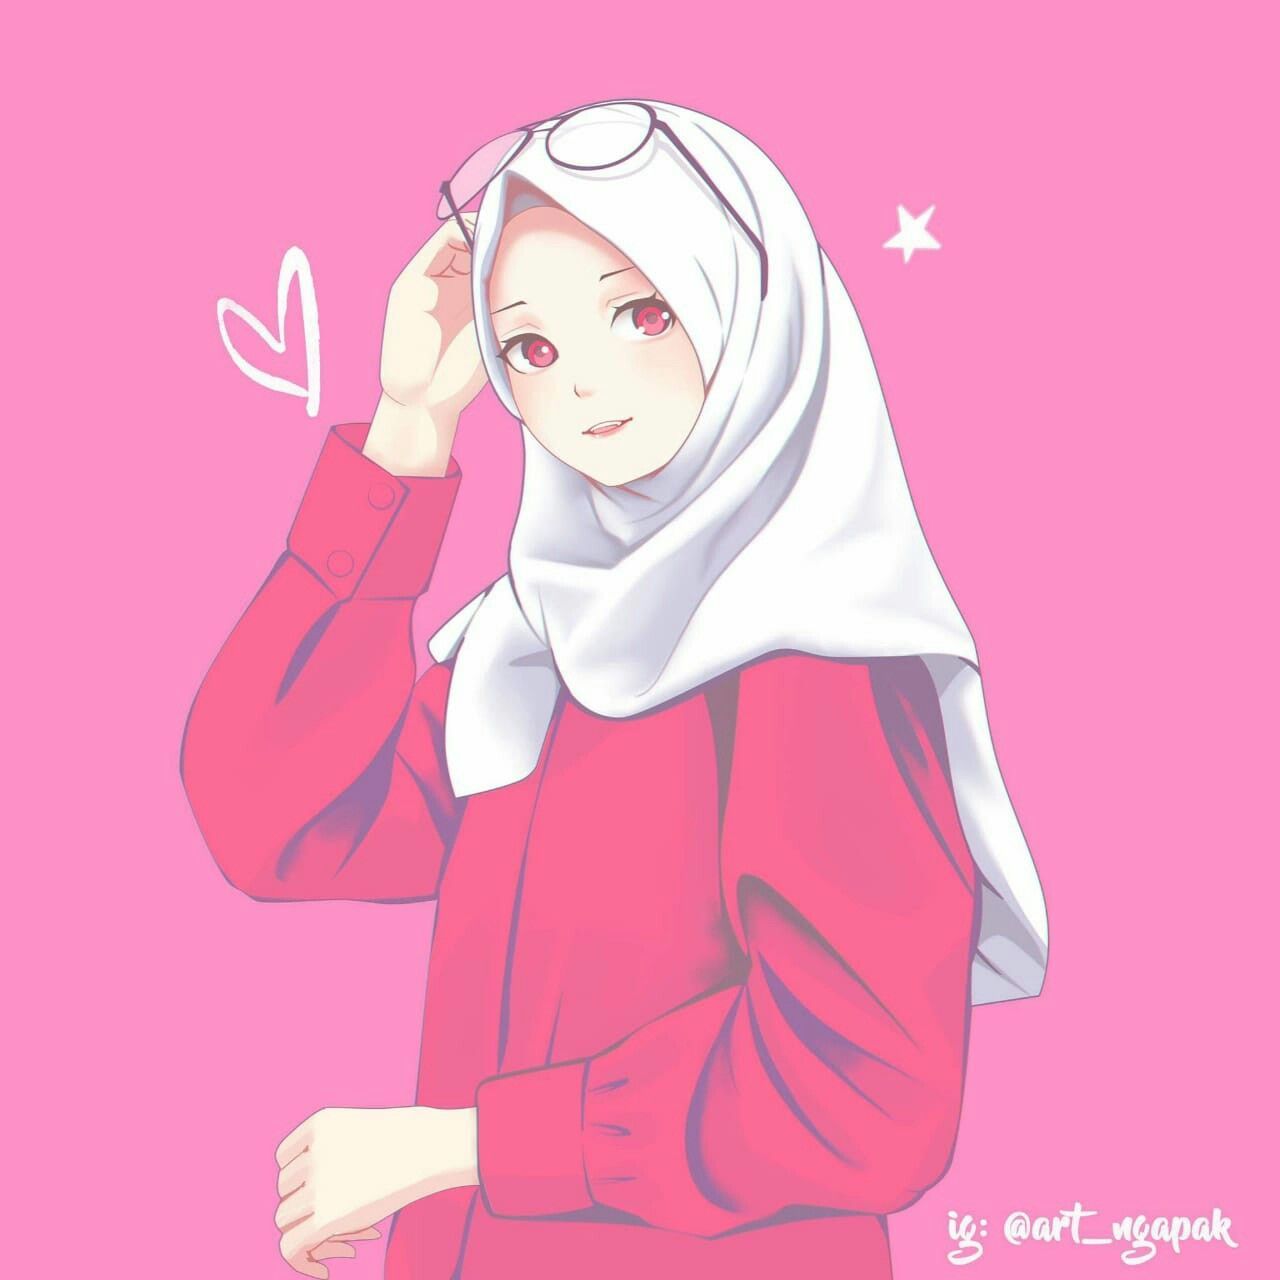 Wallpaper Hijab Kartun Anime Muslimah